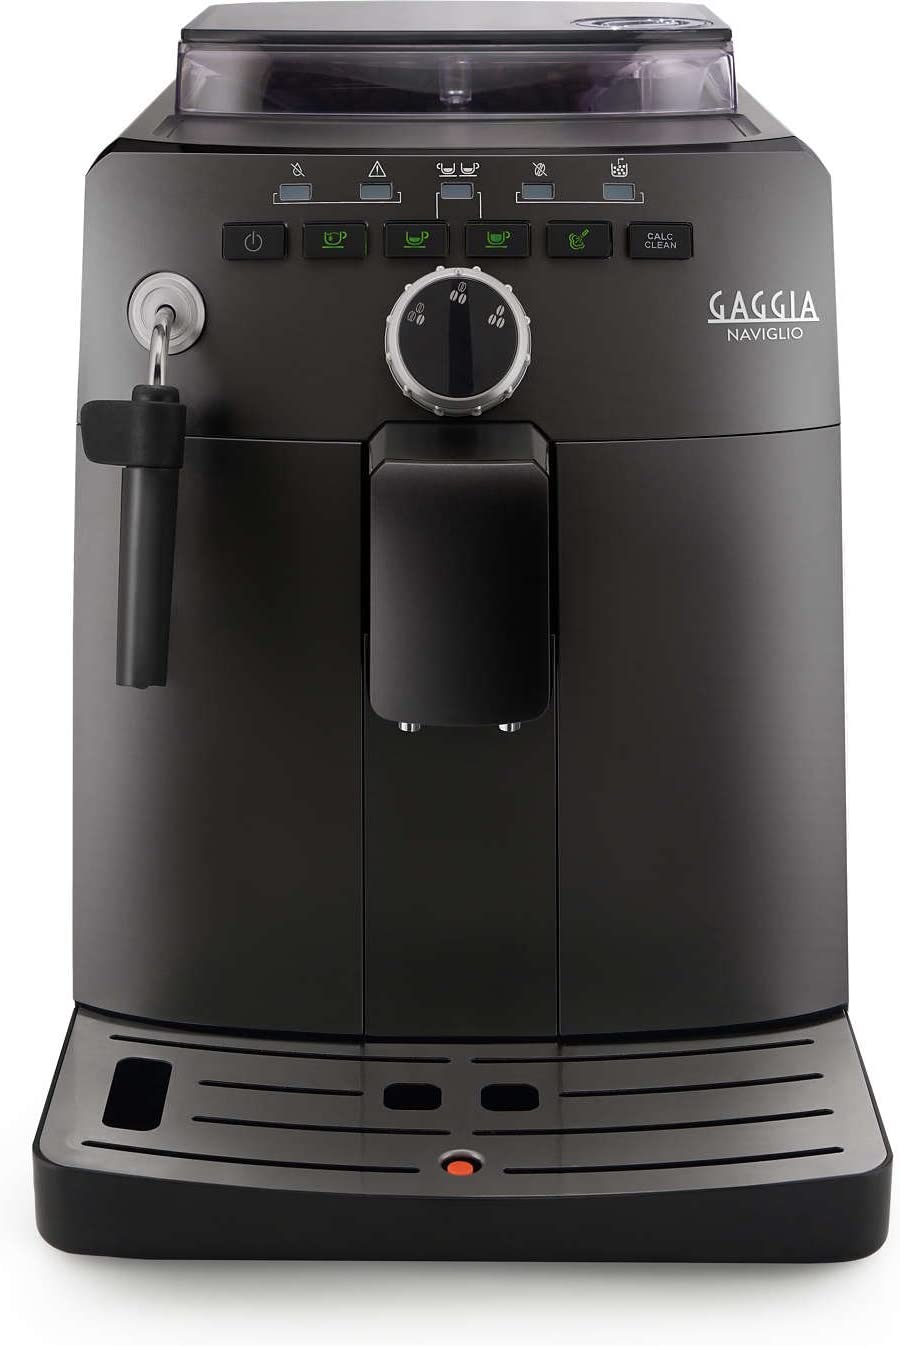 Gaggia HD874901 M.caffe' Automat.1850w 15bar Naviglio Black